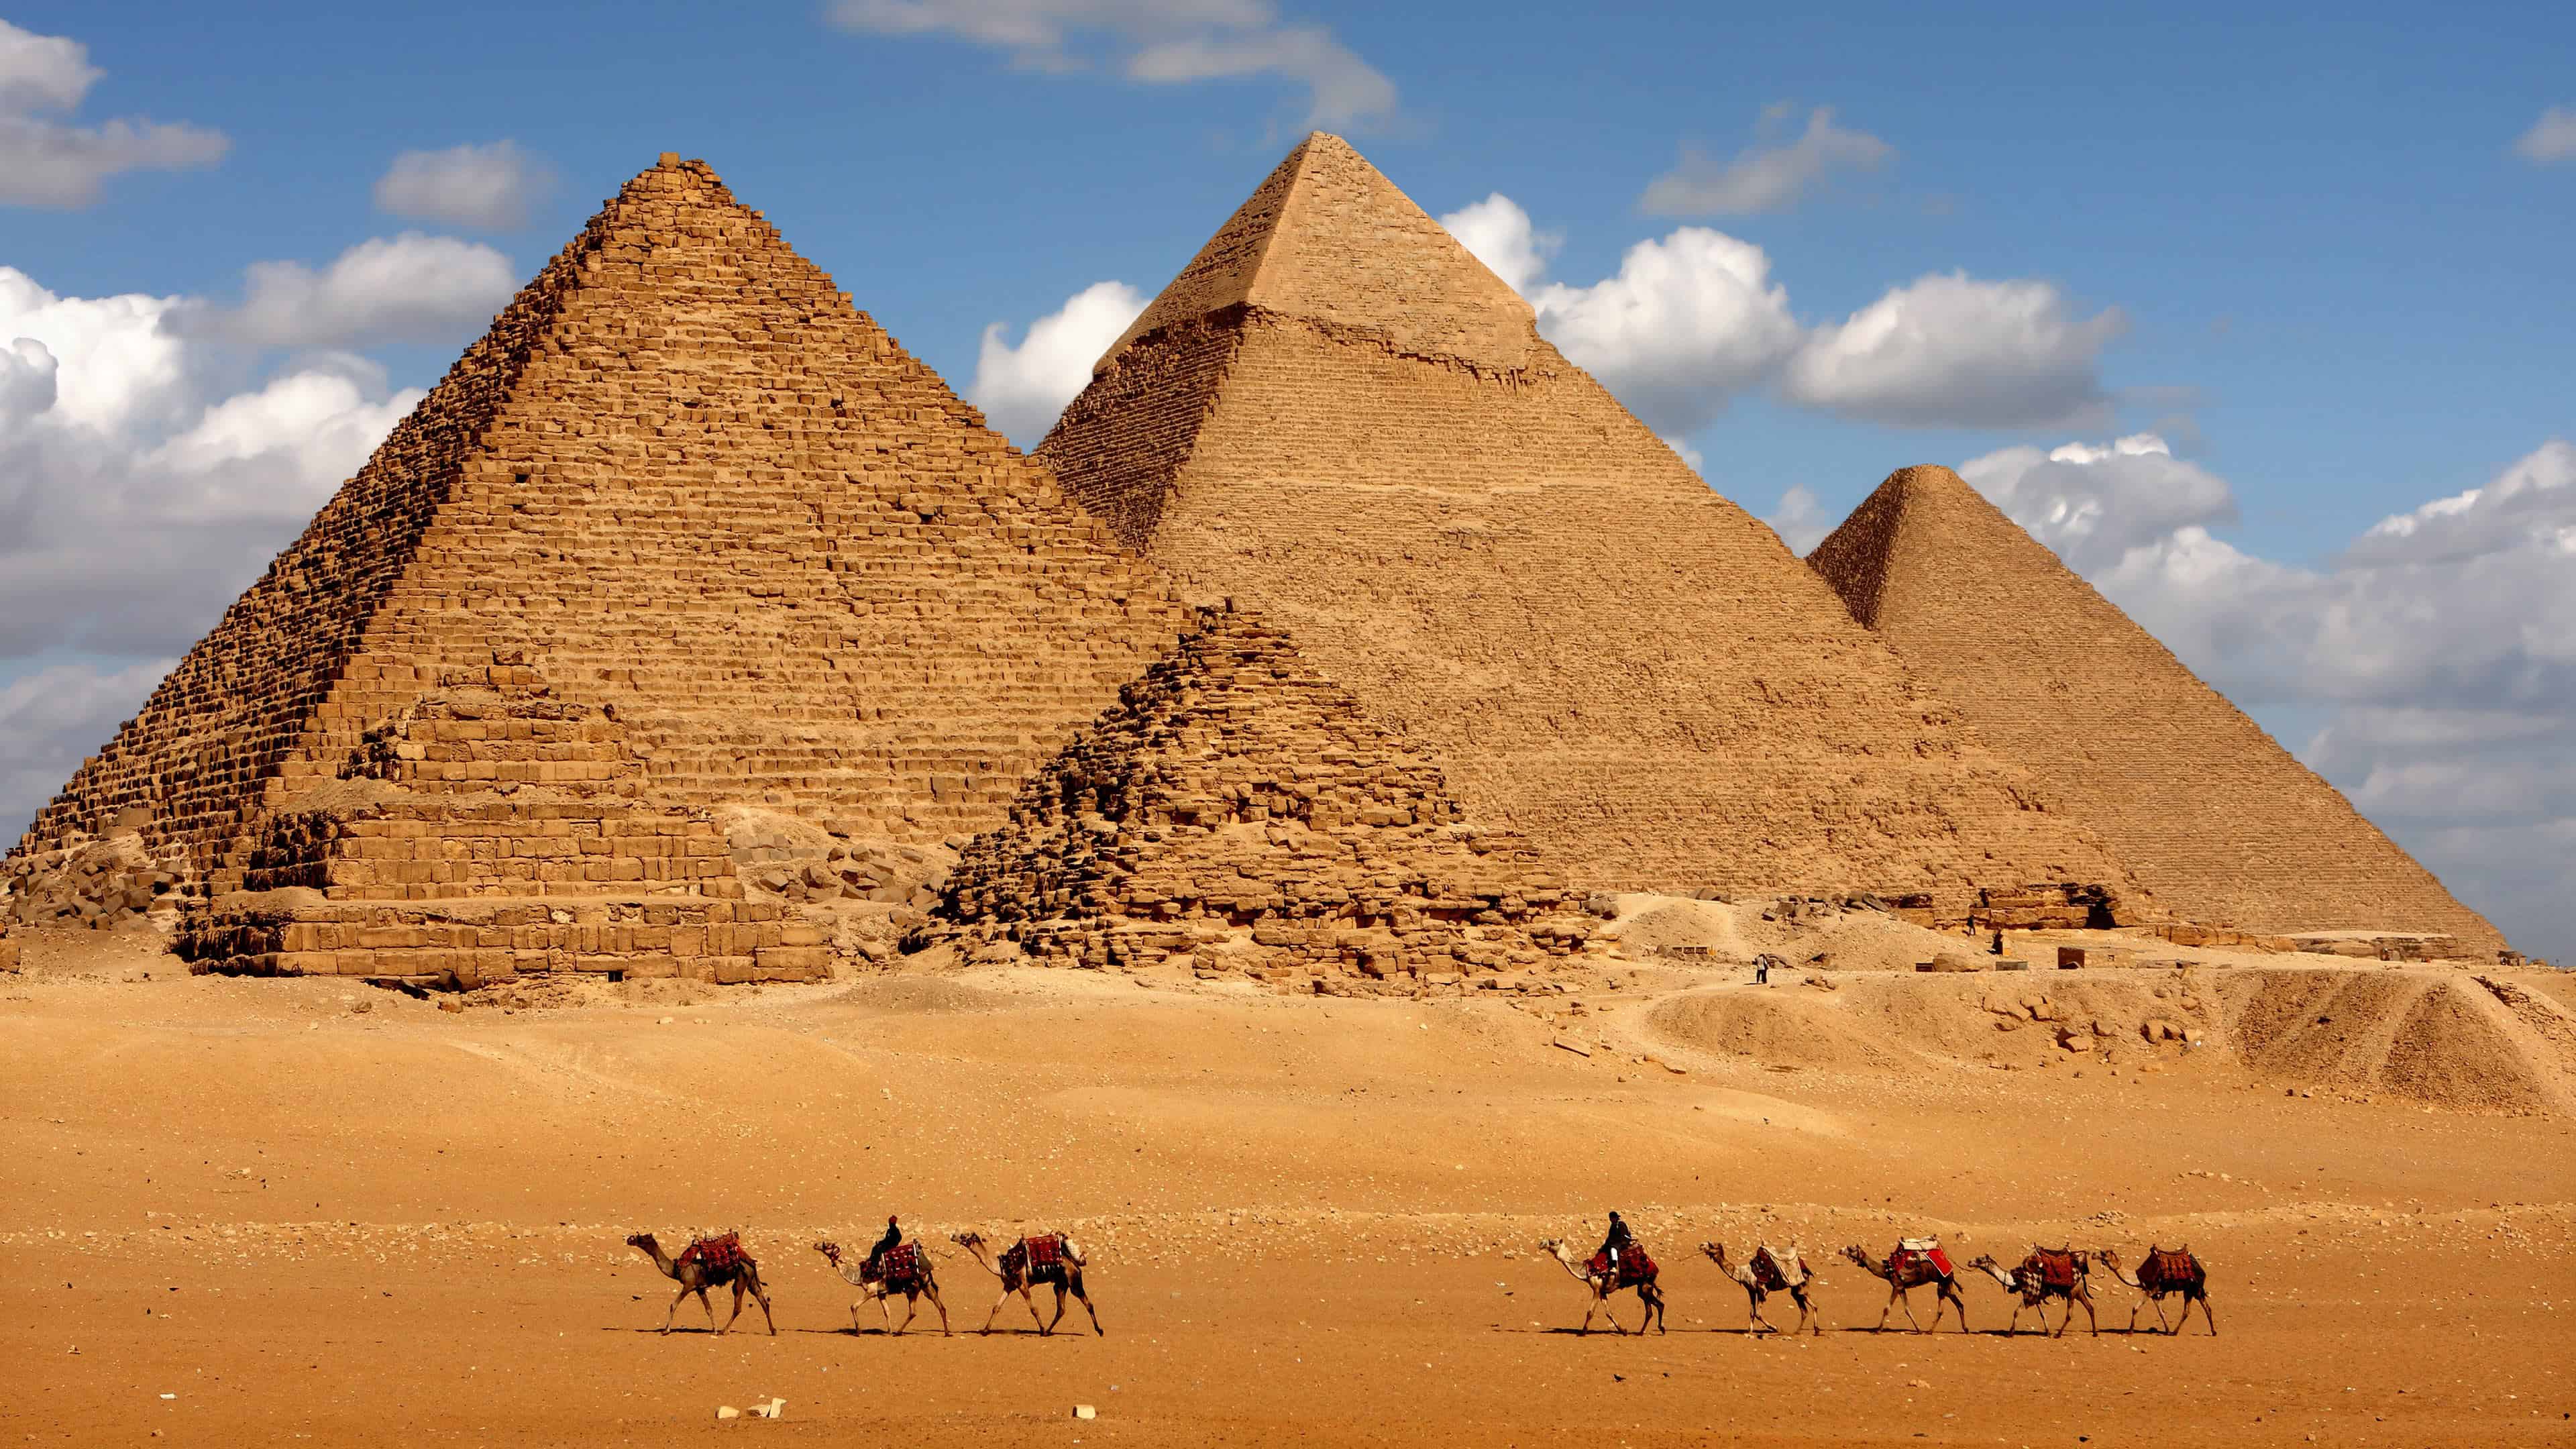 Pyramids And Camels Egypt UHD 4K Wallpaper Pixelz